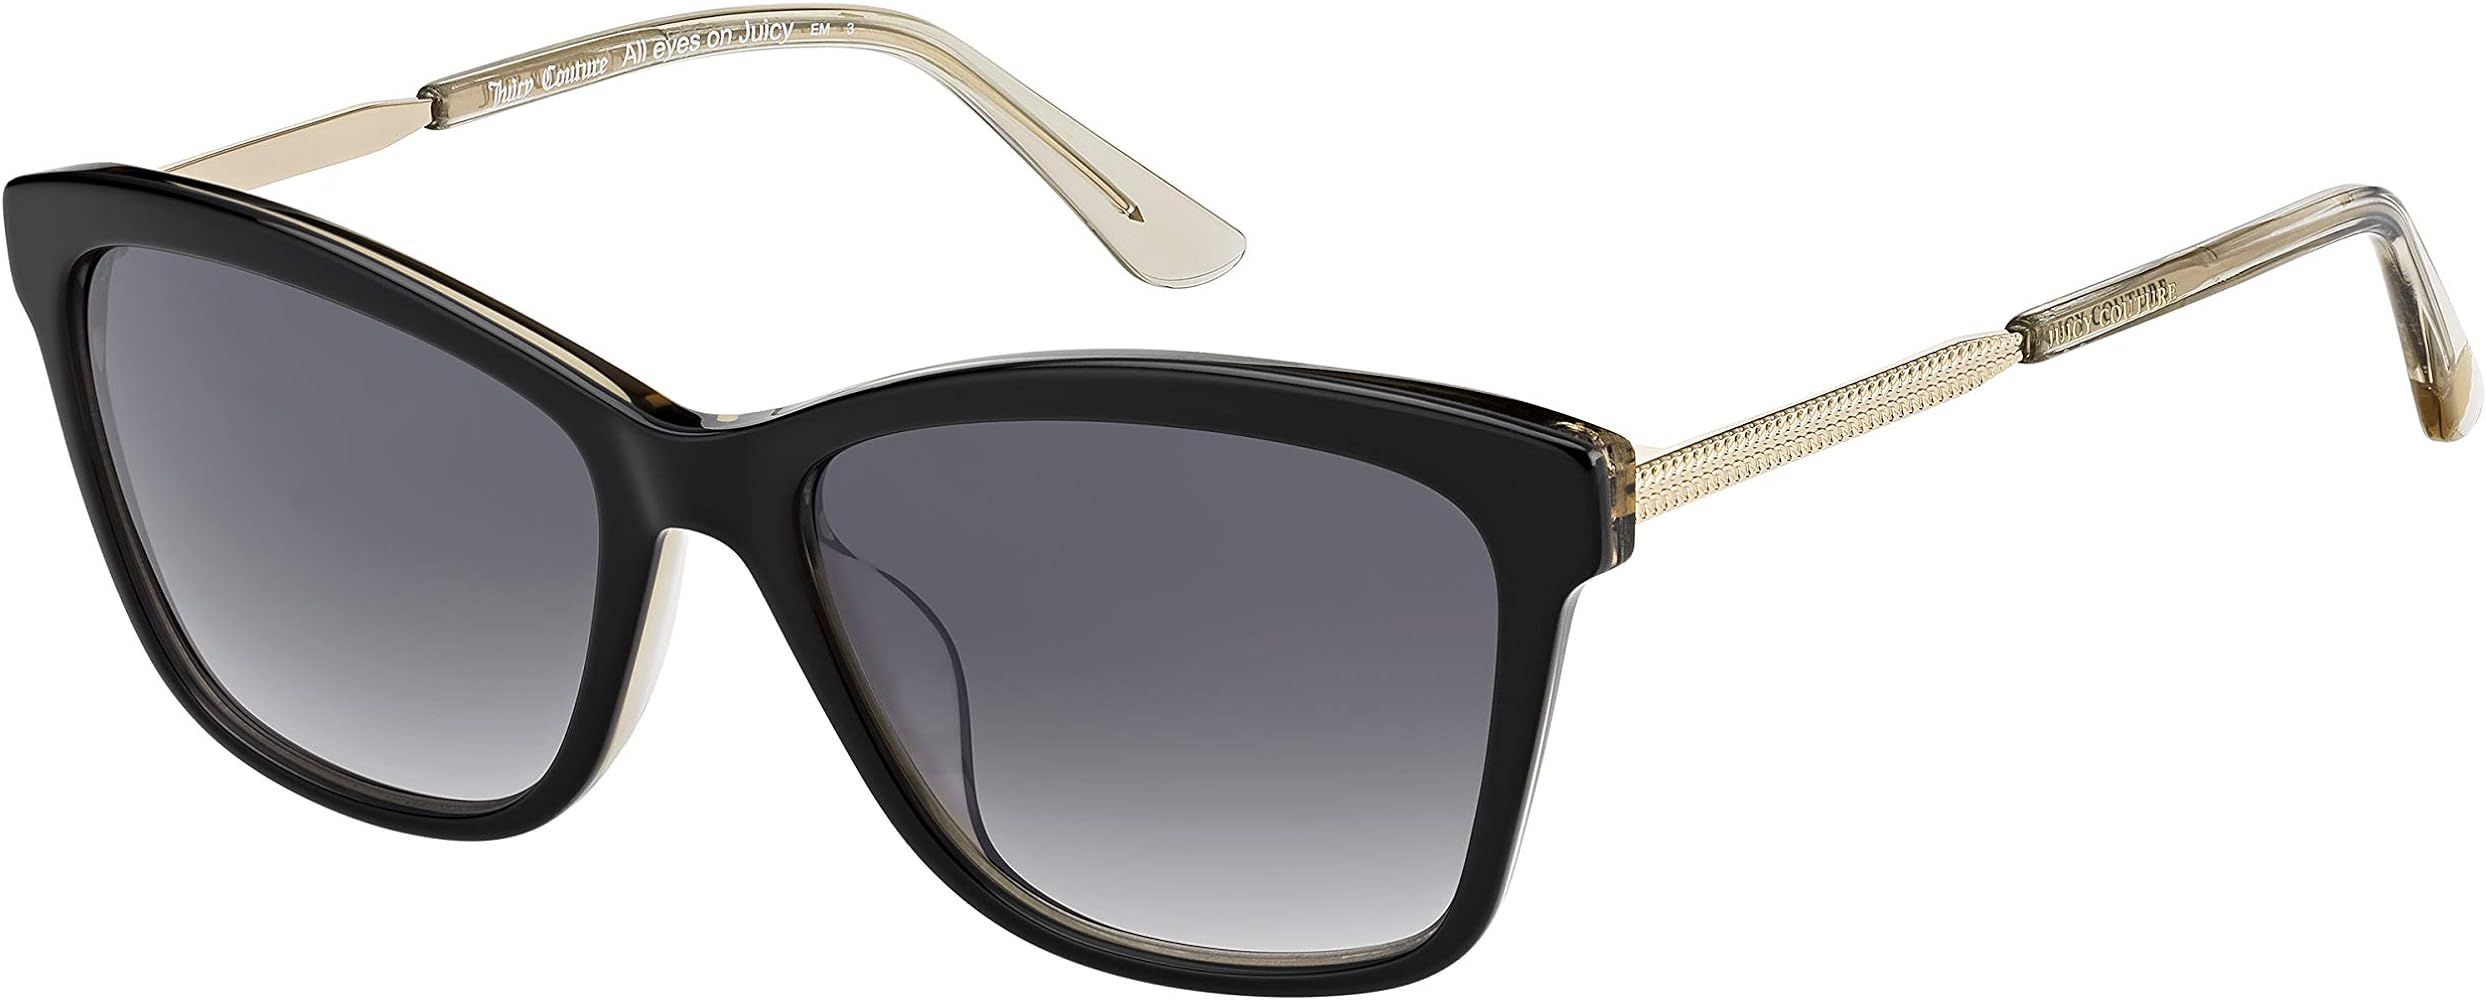 Sunglasses Juicy Couture 604 /S 00WM Black Beige / 9o Dark Gray Gradient | Amazon (US)